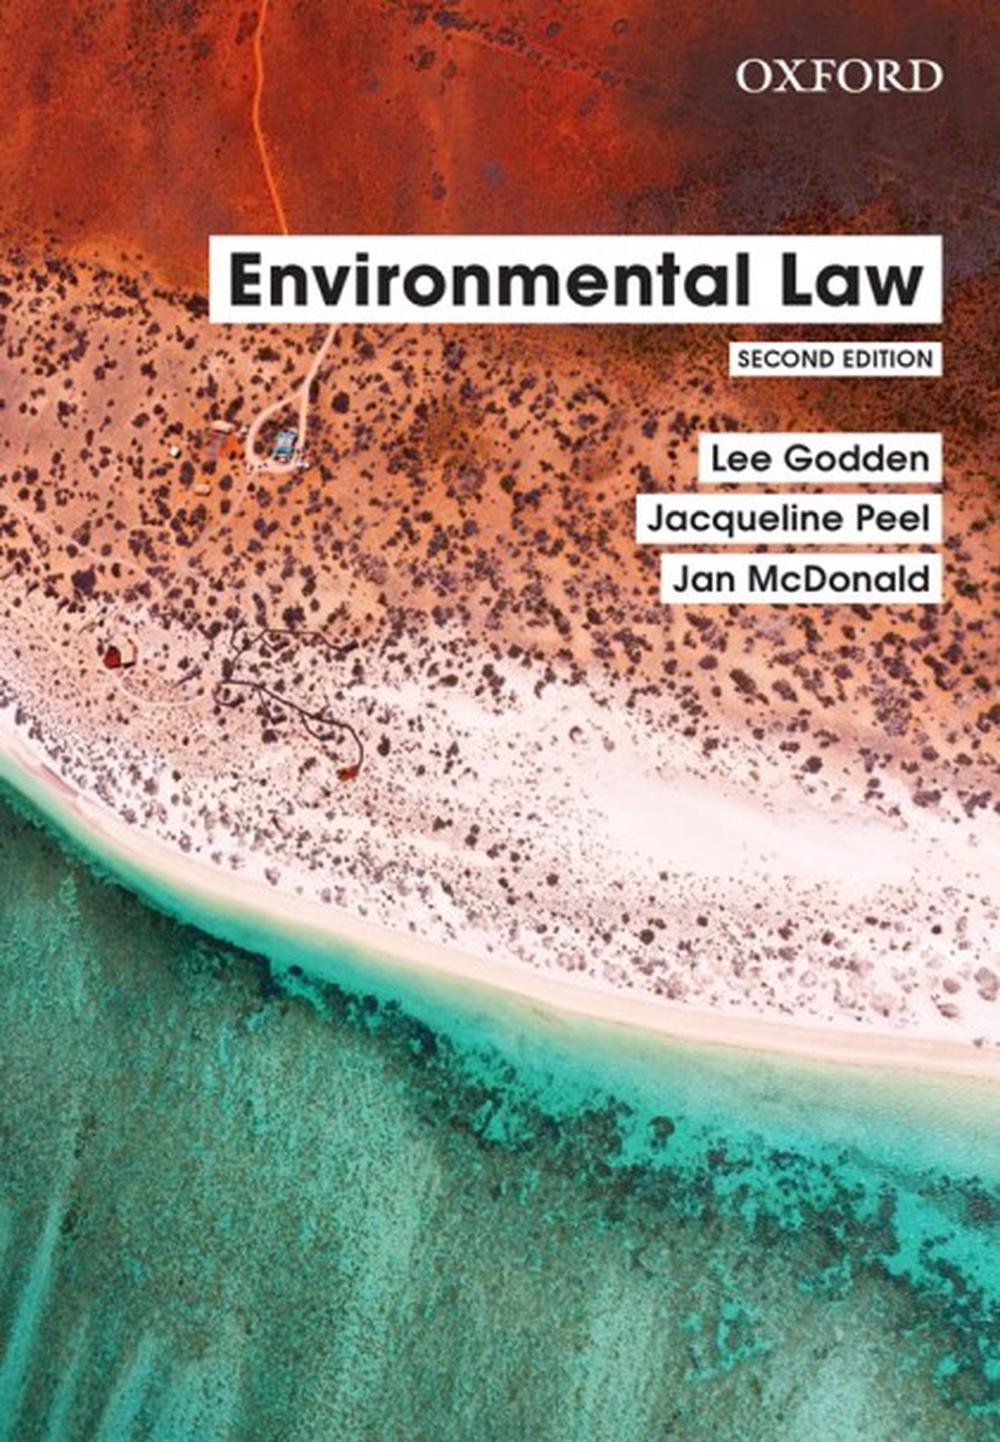 Environmental Law by Lee Godden, Paperback, 9780195522297 Buy online